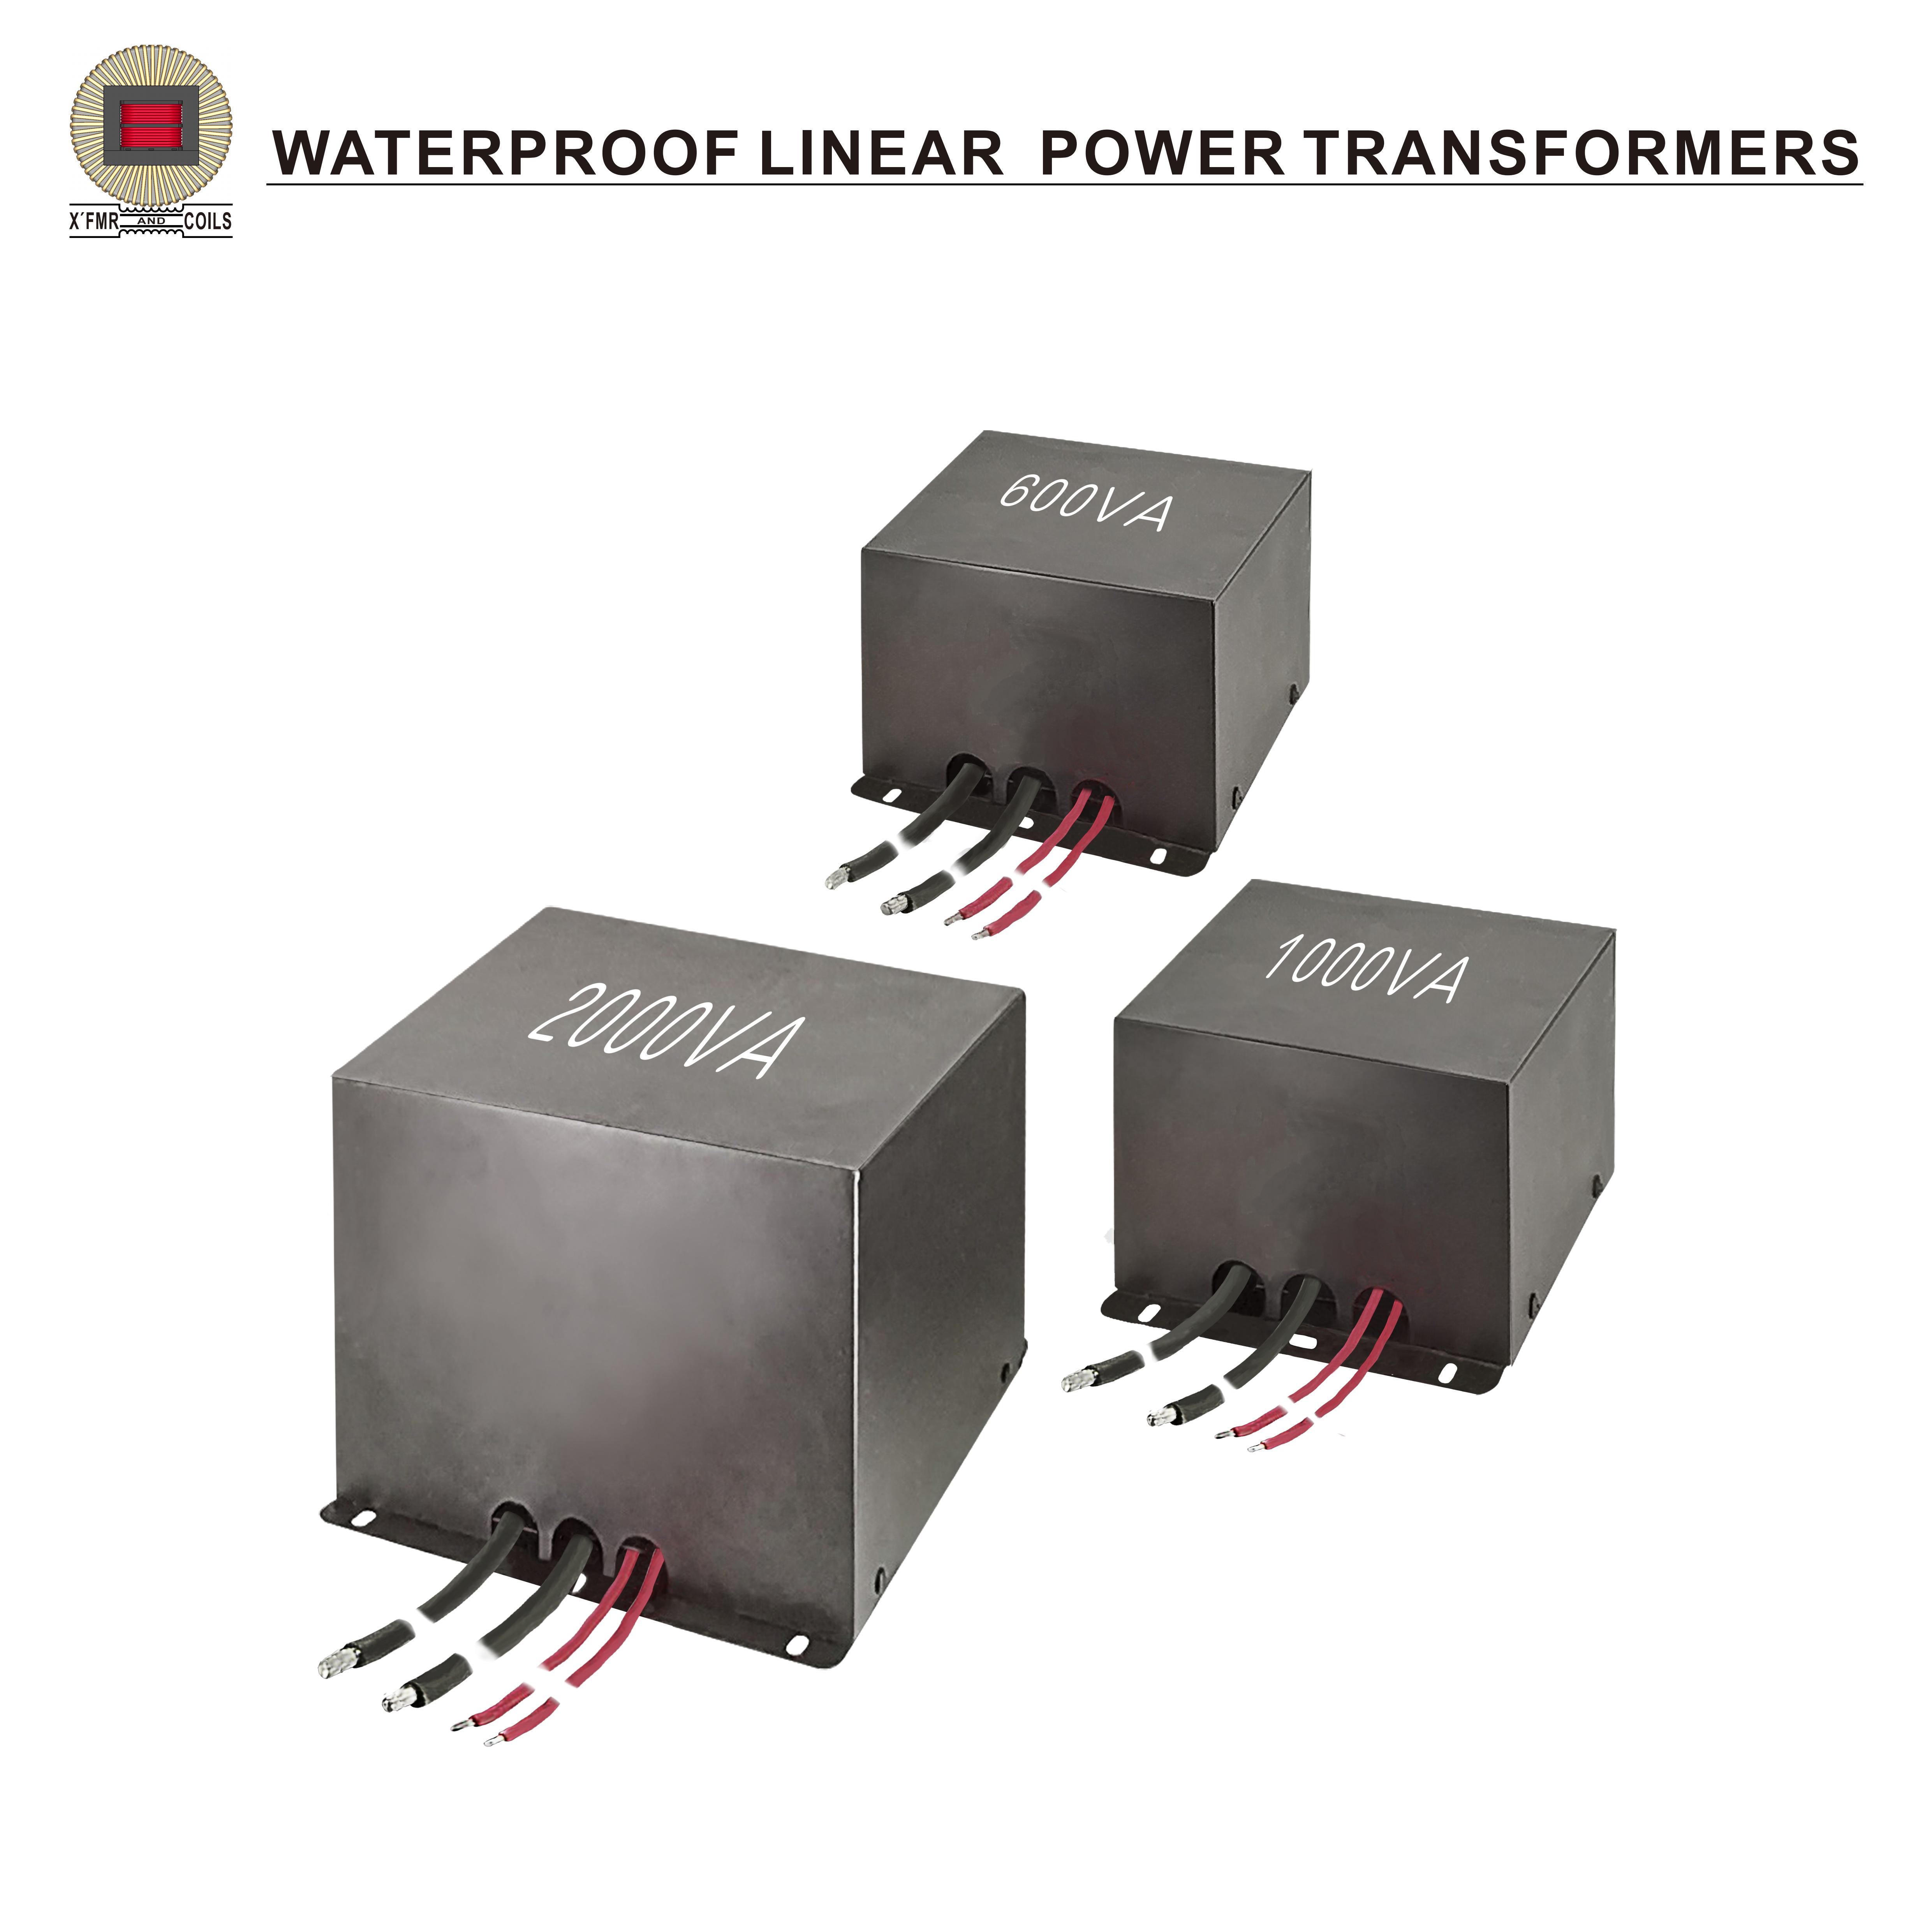 Waterproof Linear Power Transformers WLPT-03 Series